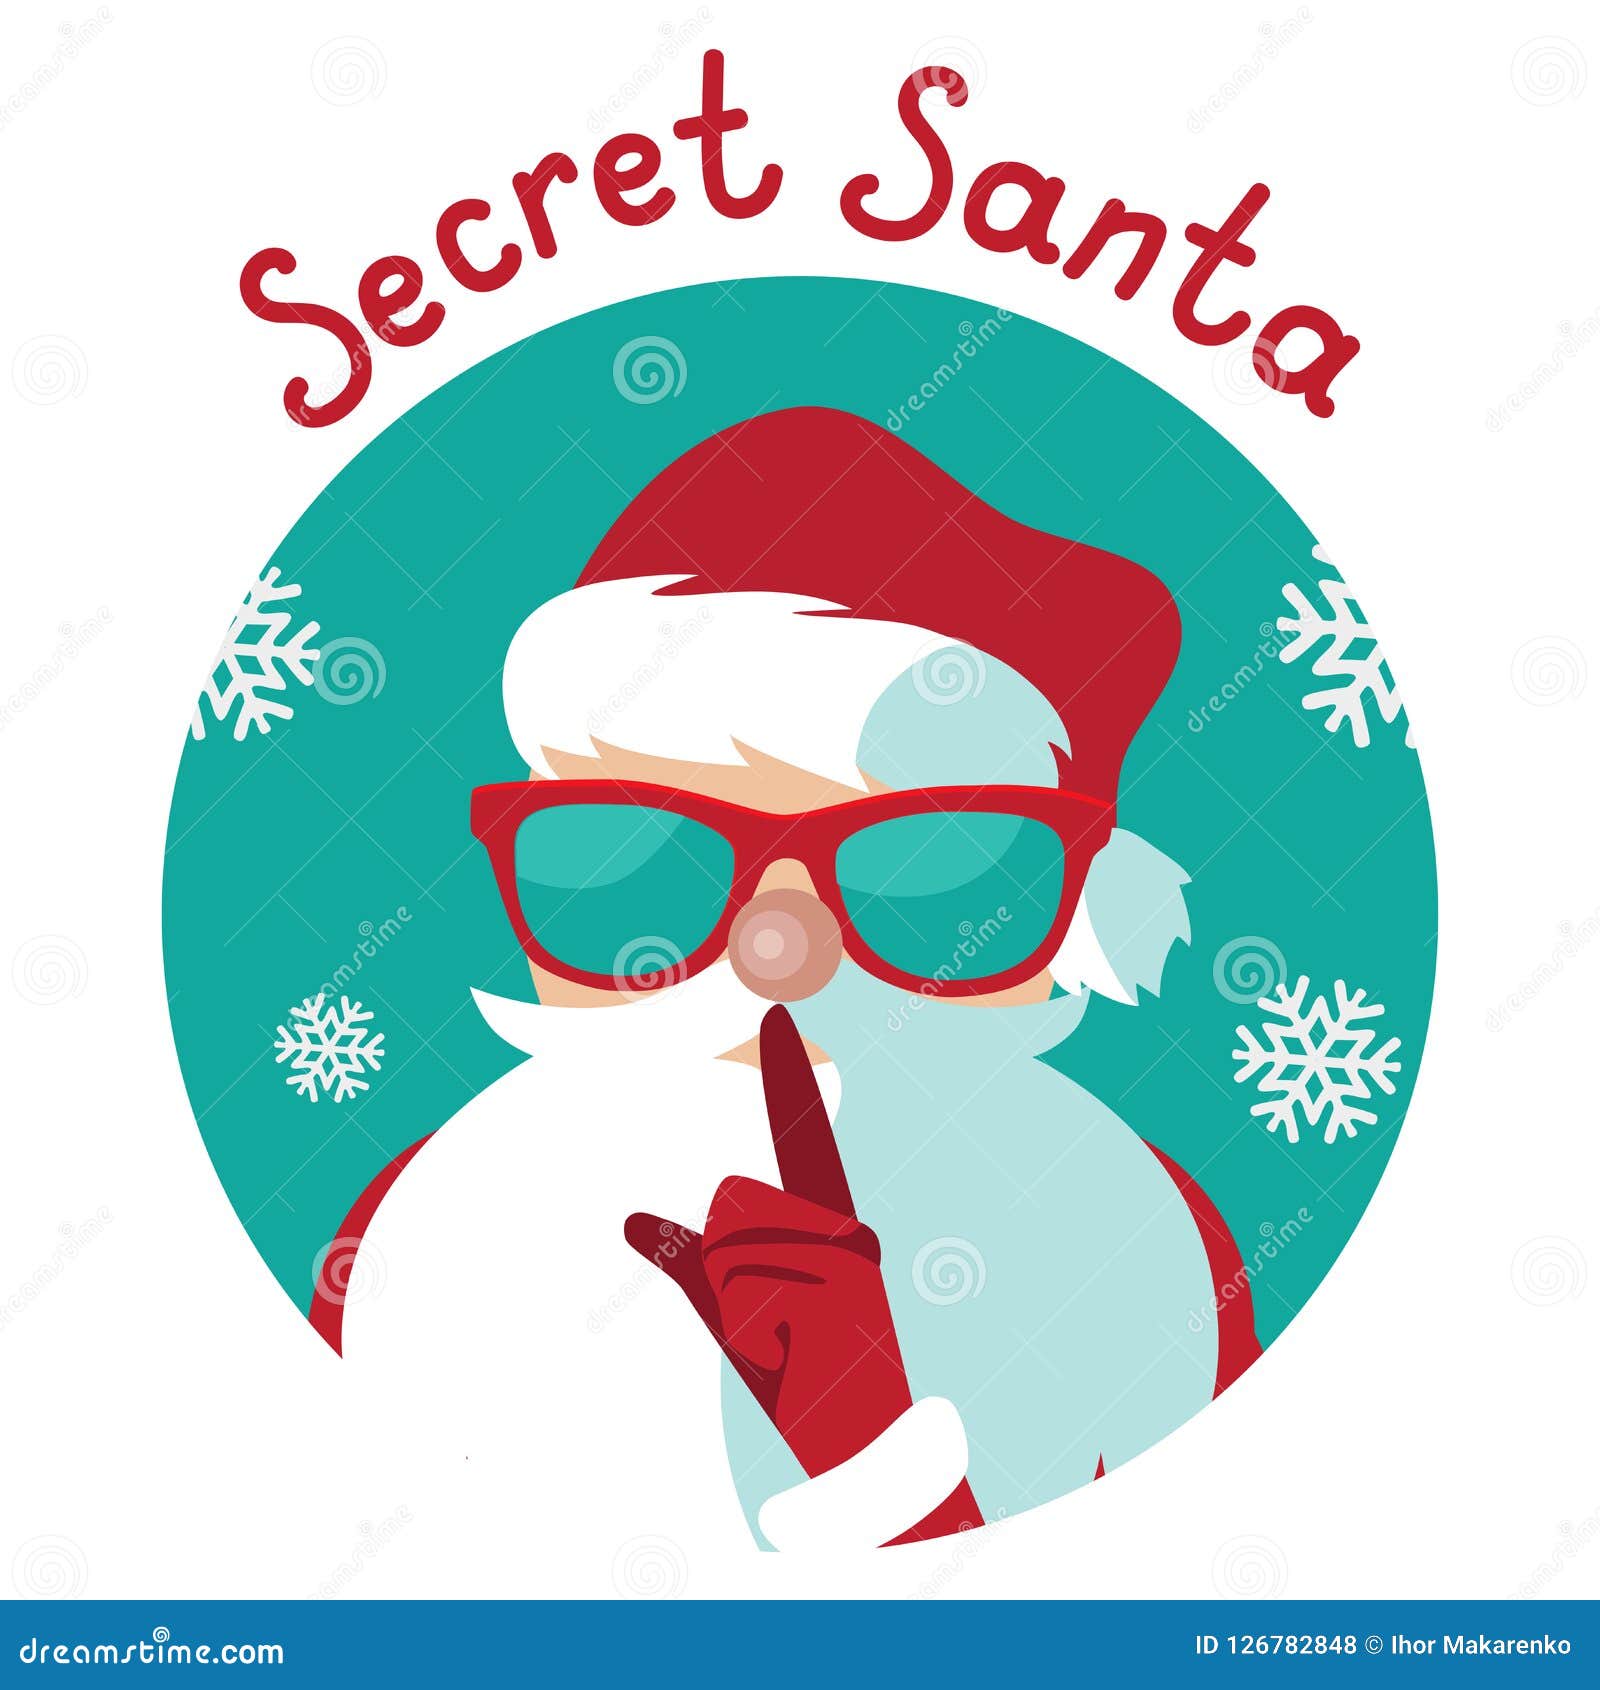 Cartoon Secret Santa Christmas Illustration Shushing You with His Finger  Stock Vector - Illustration of invitation, celebration: 126782848